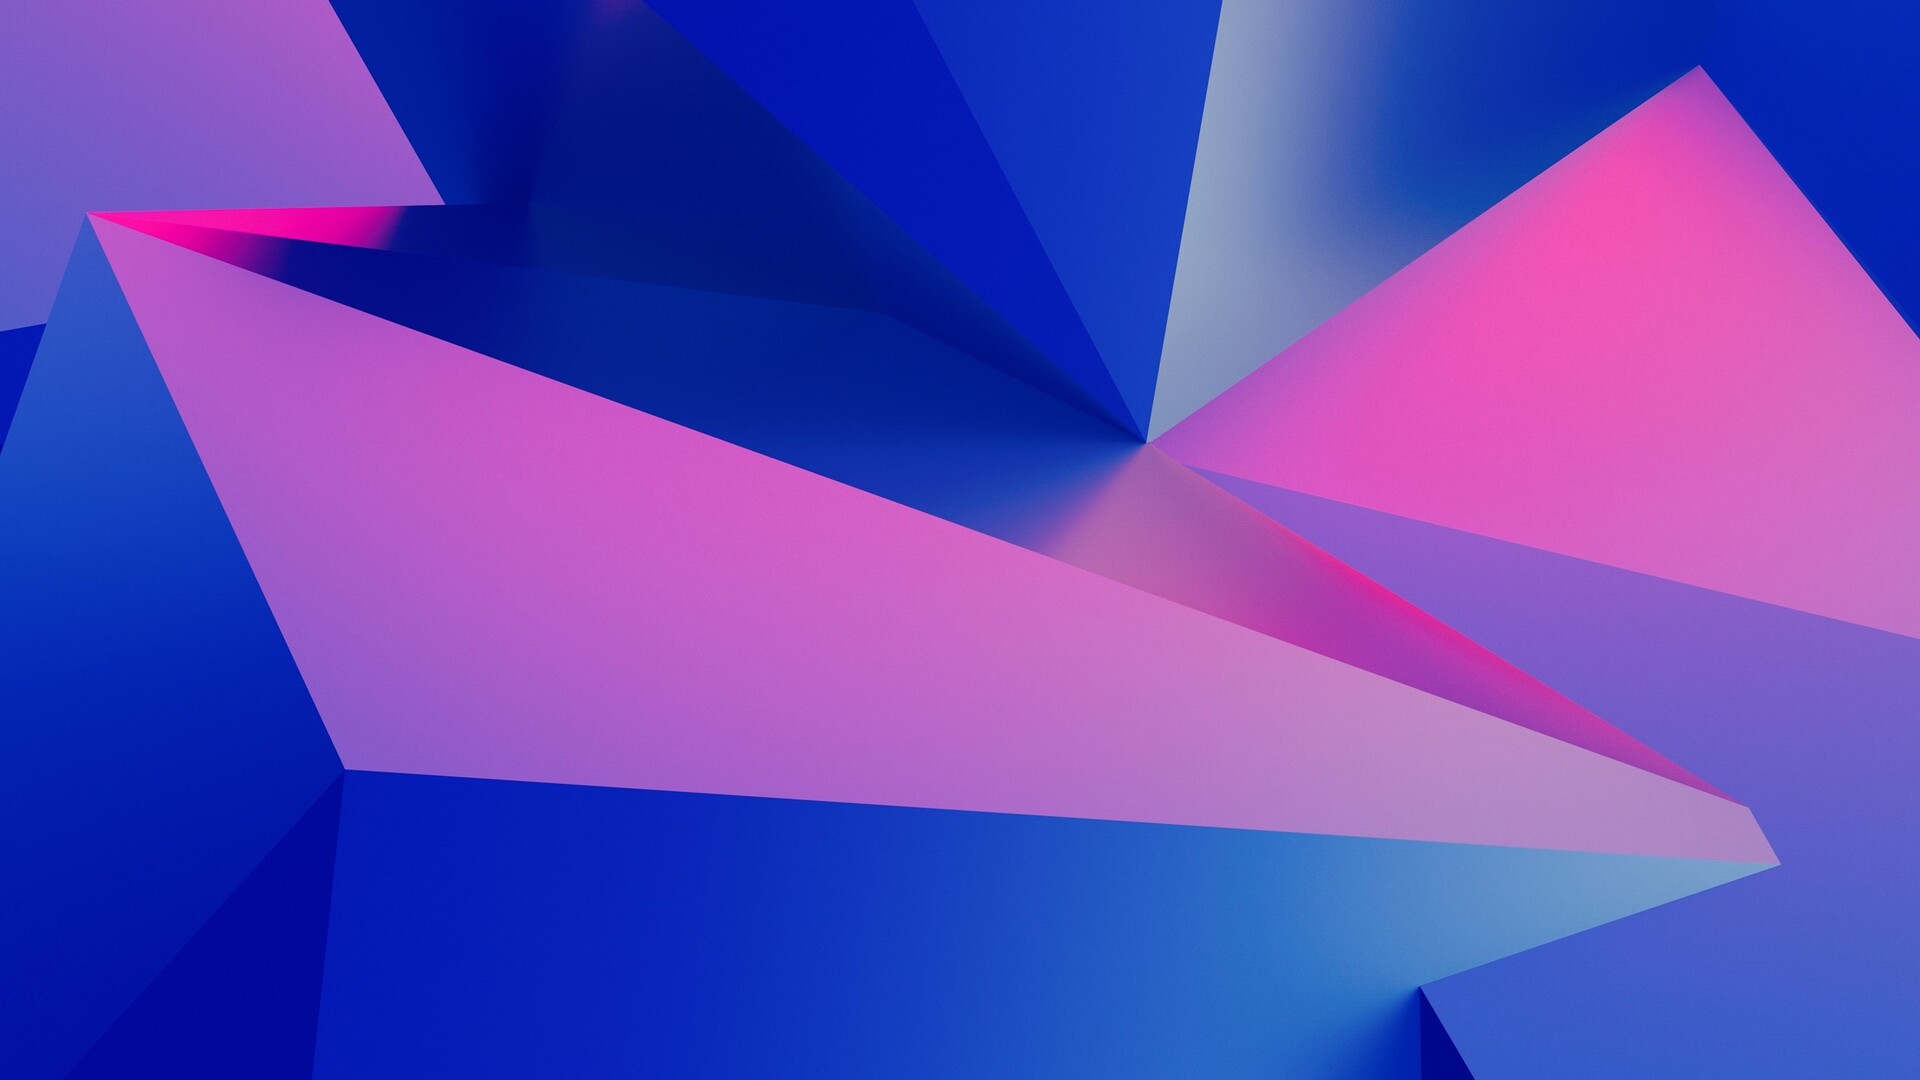 3d Geometry Abstract hd wallpaper - KDE Store